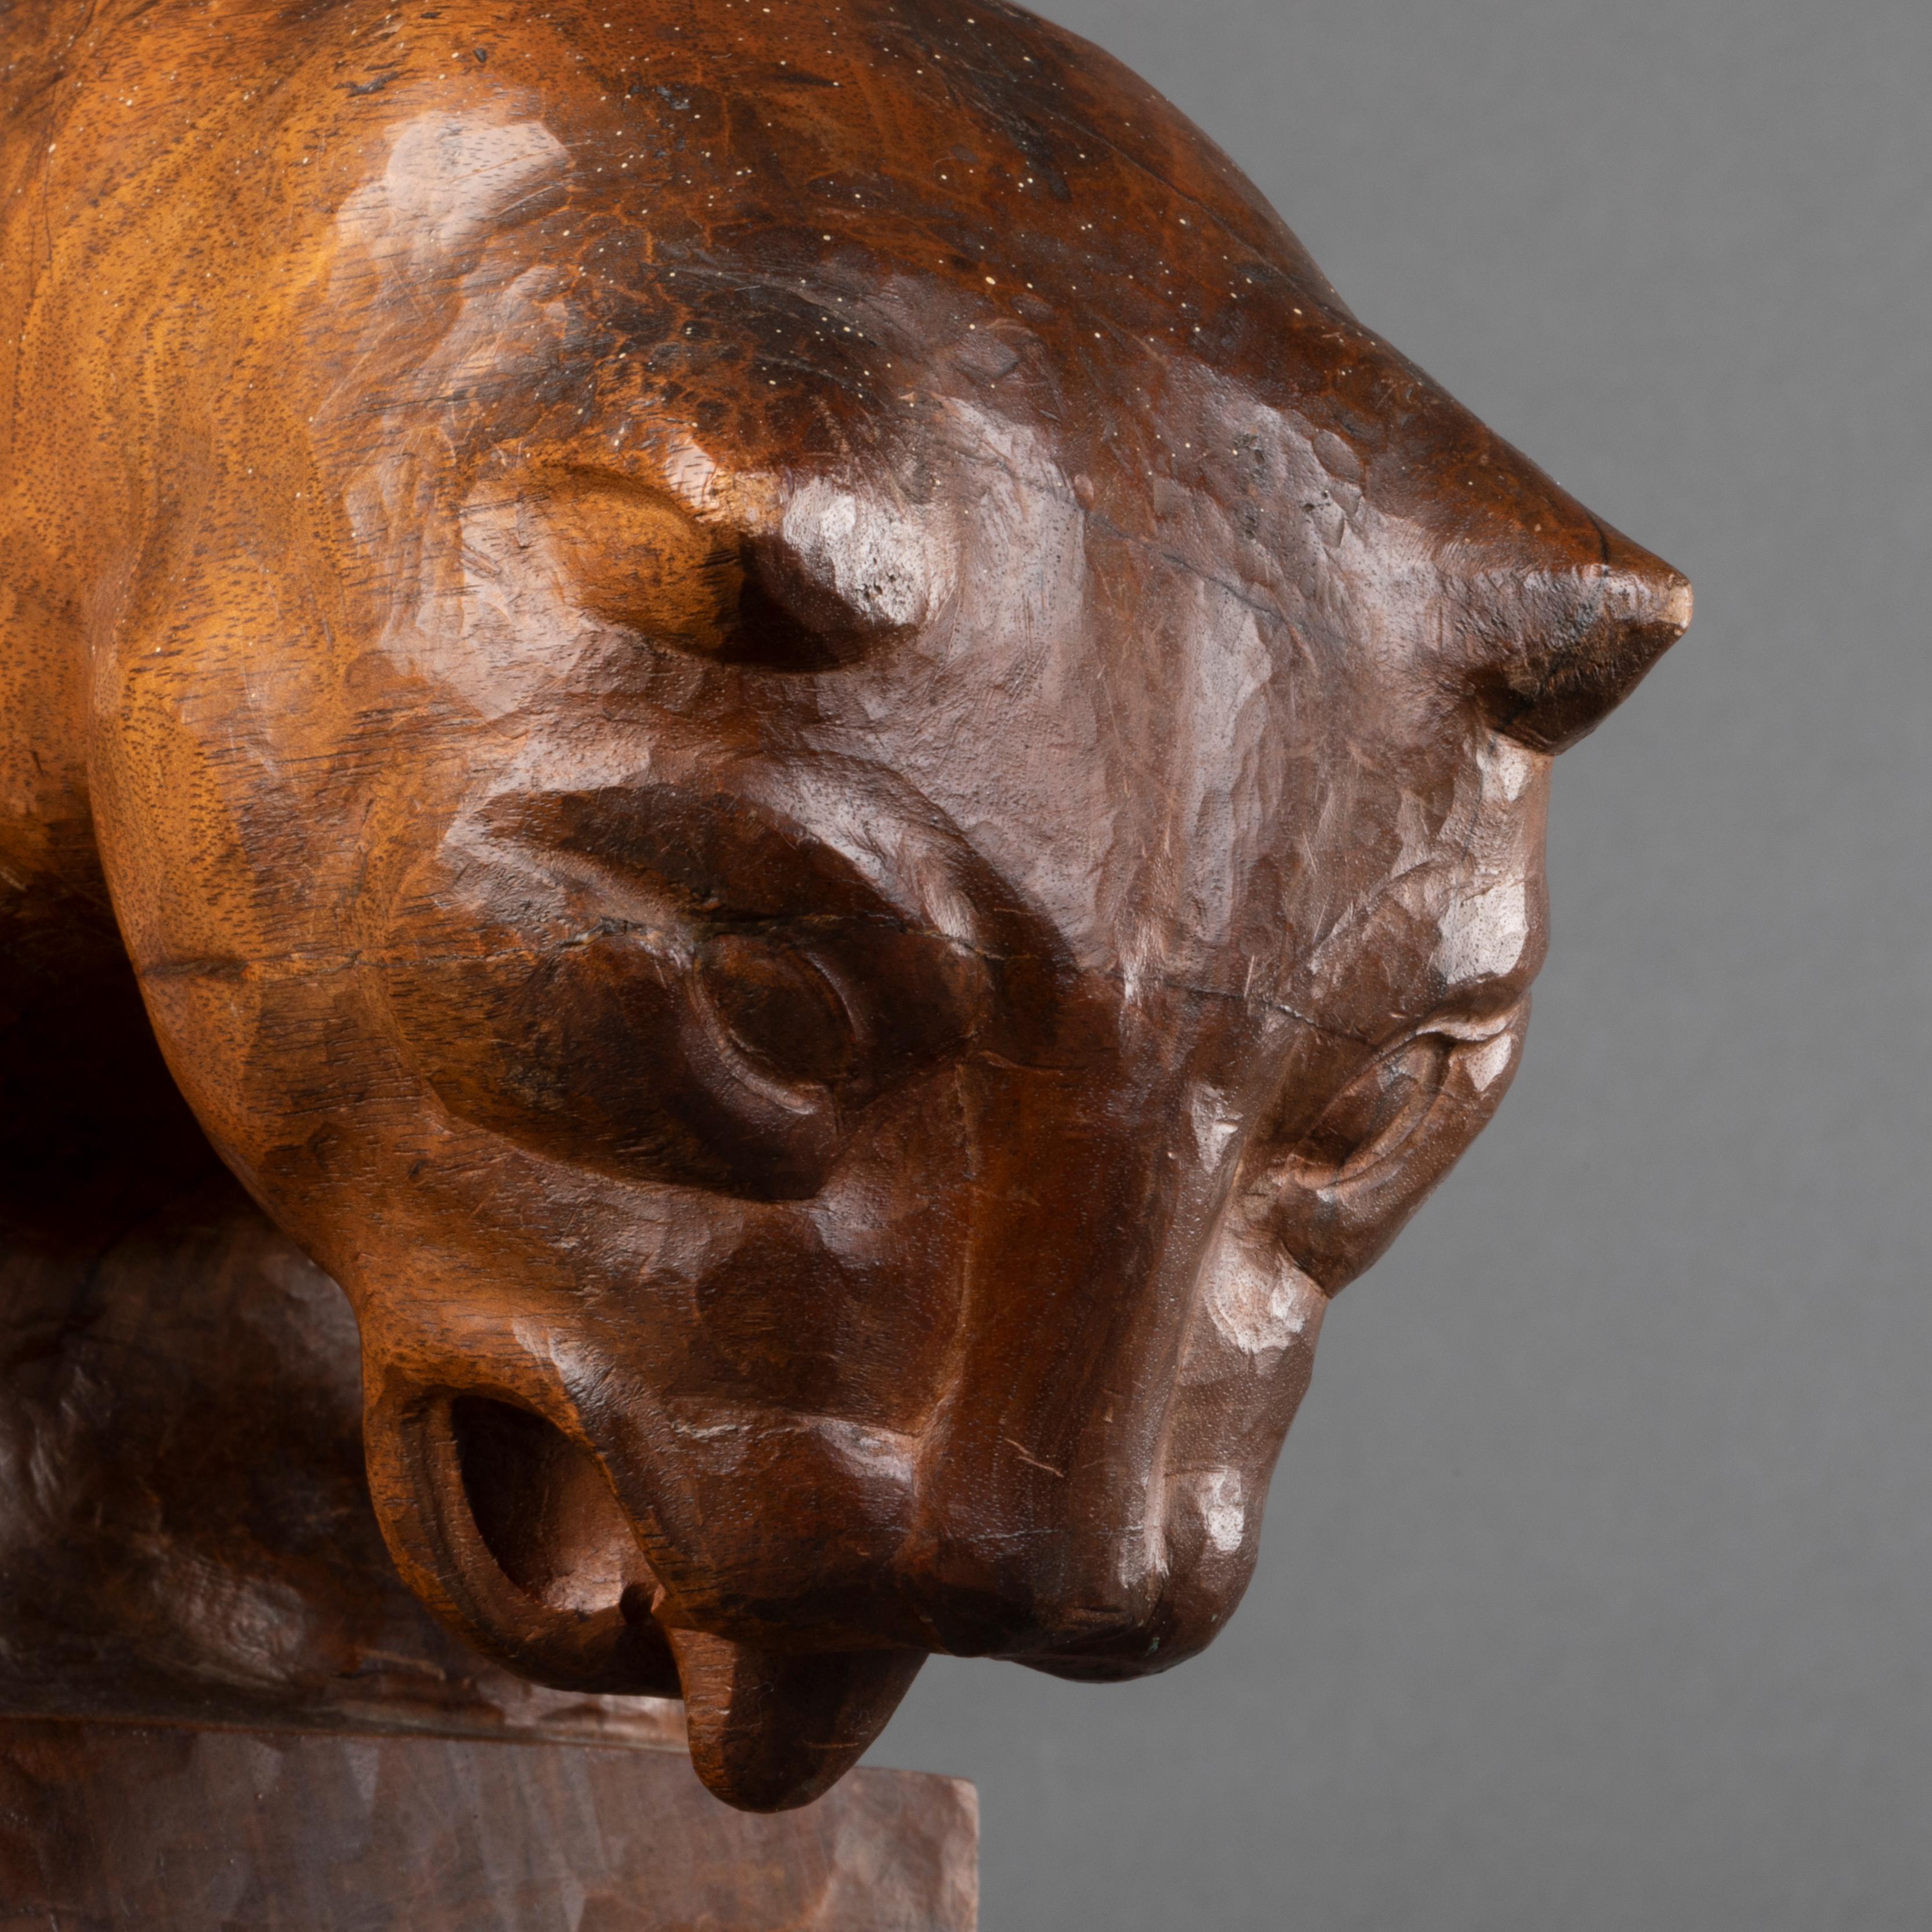 20th Century Auguste Trémont(attrib.) : Lion cub drinking, carved wood sculpture c.1950 For Sale